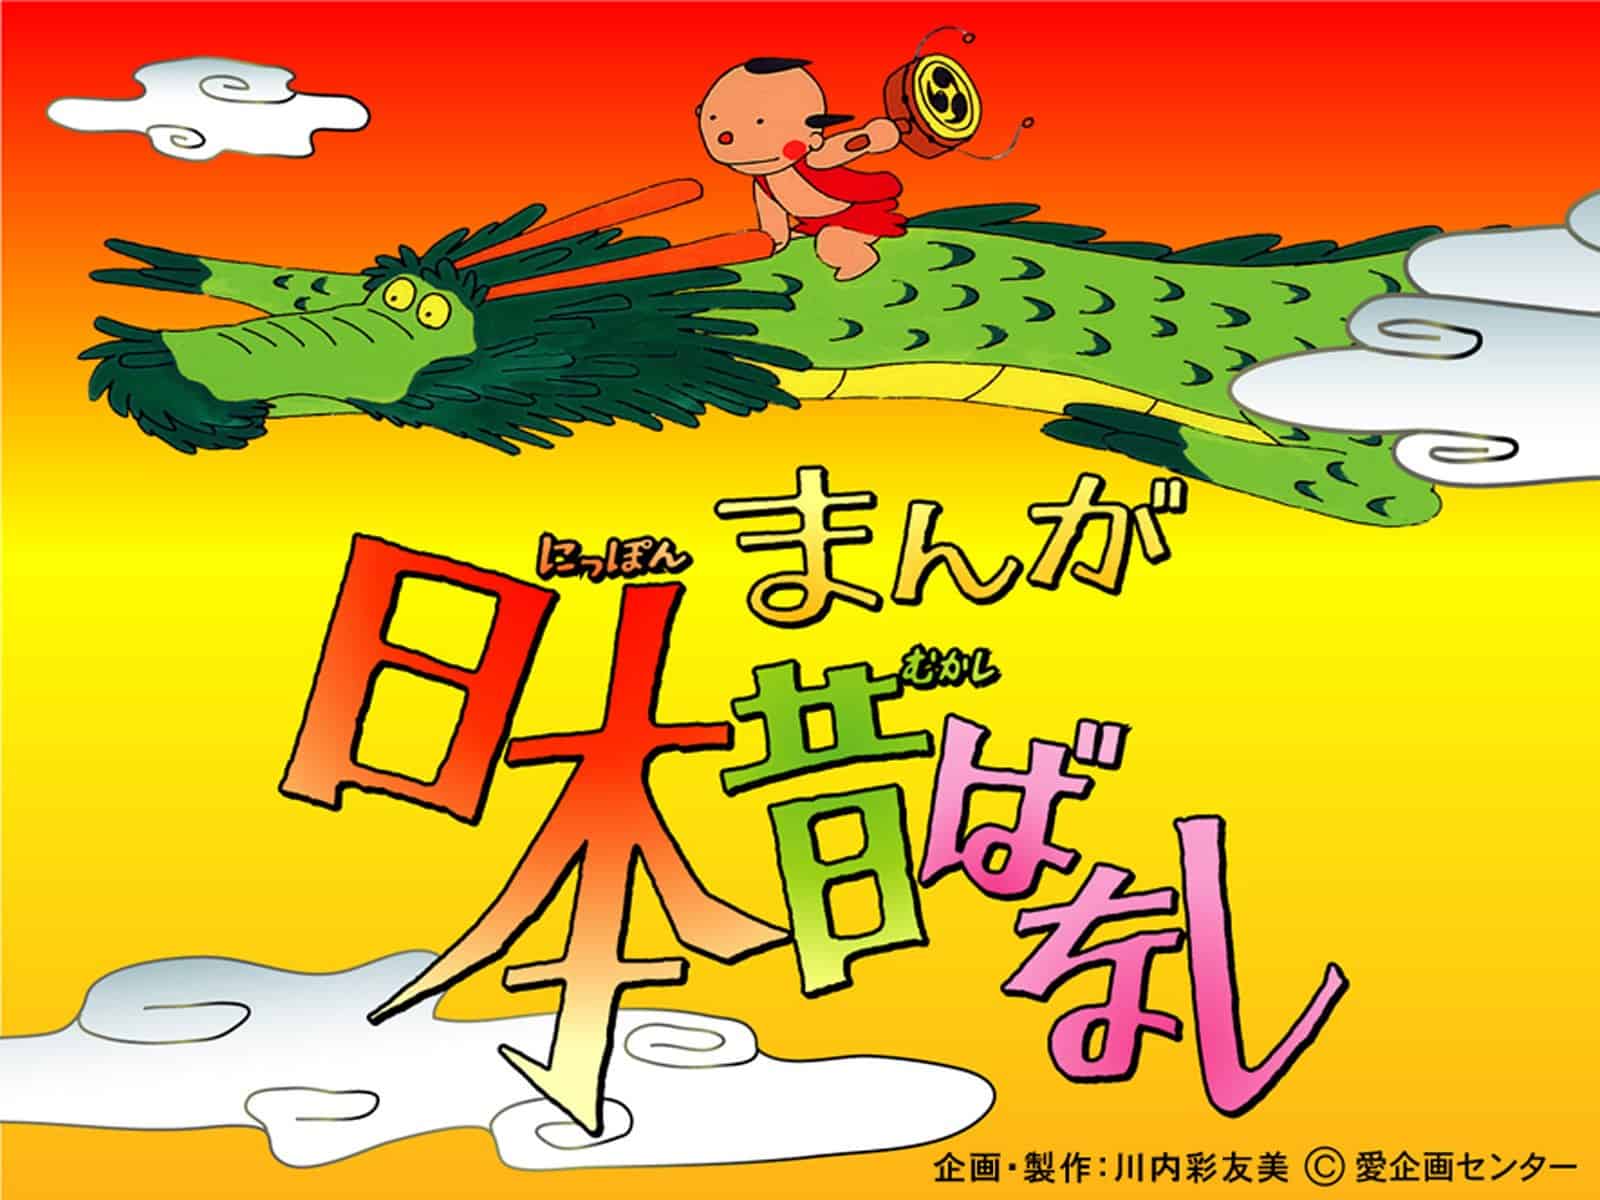 Manga Nippon Mukashi Banashi, anime series